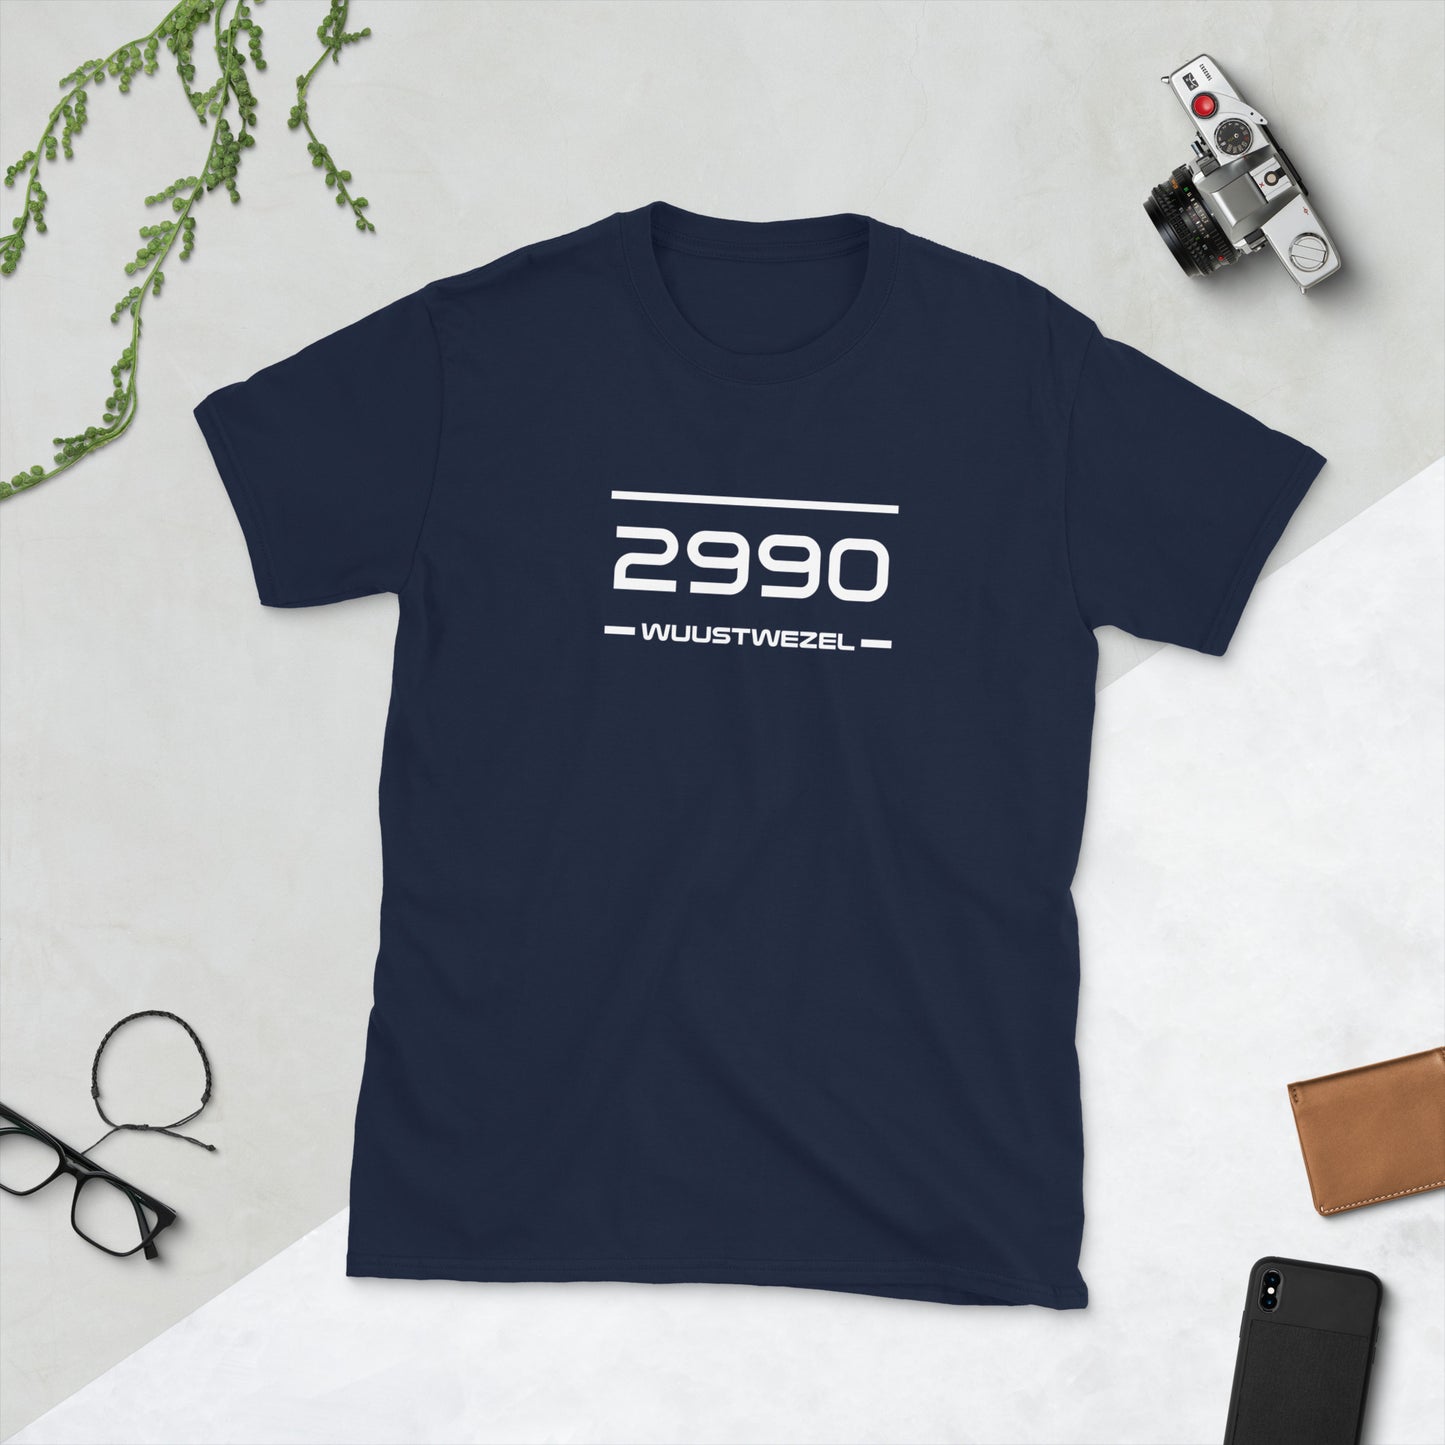 Tshirt - 2990 - Wuustwezel